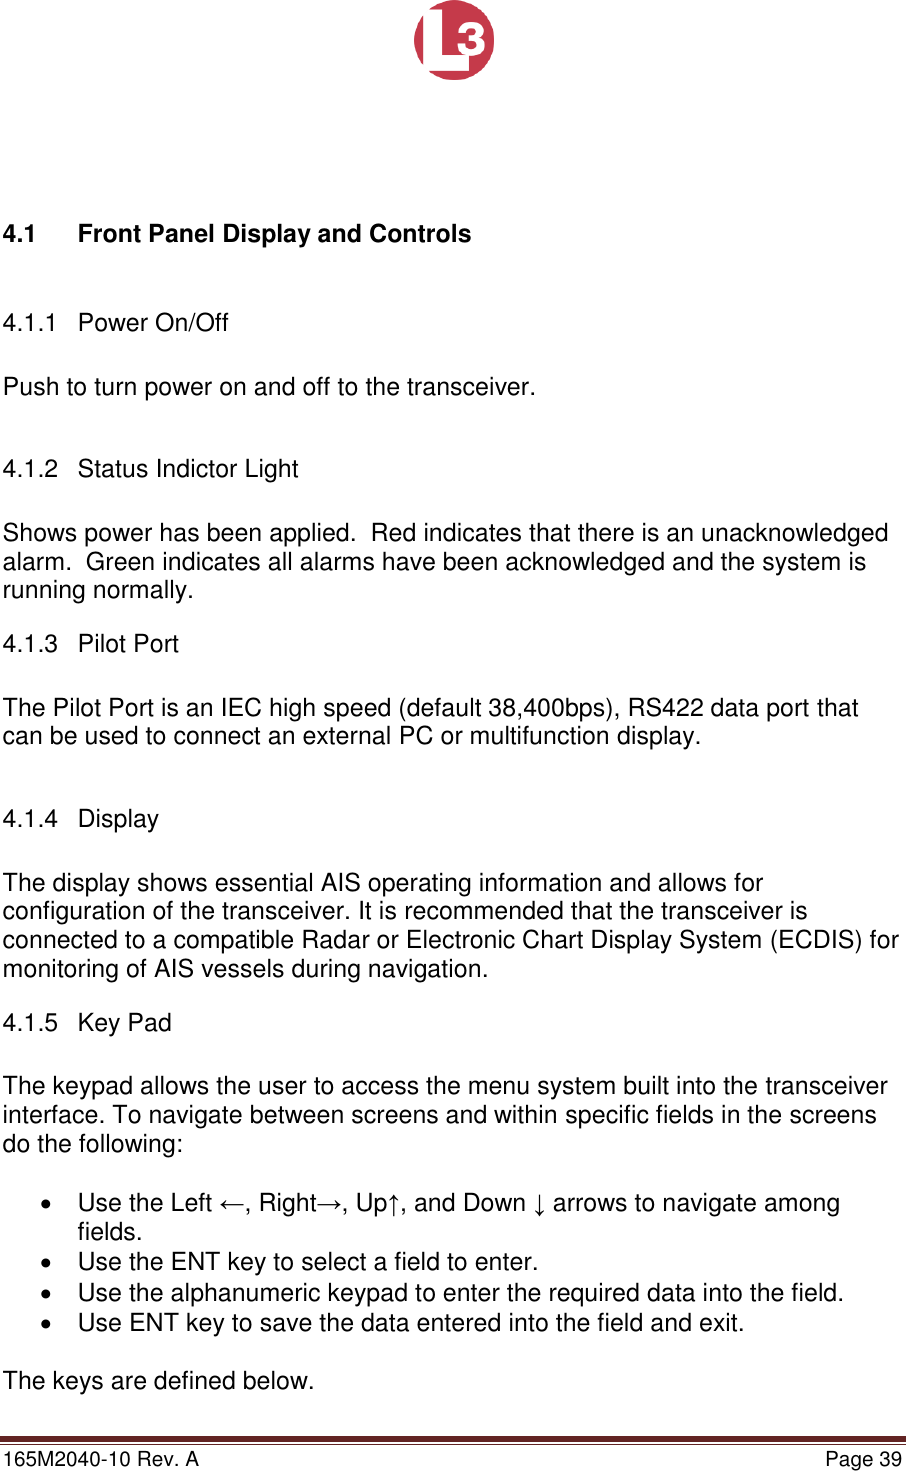 Page 39 of L3 Technologies AISA6 Shipboard Mobile AIS User Manual Memory Verification Procedure